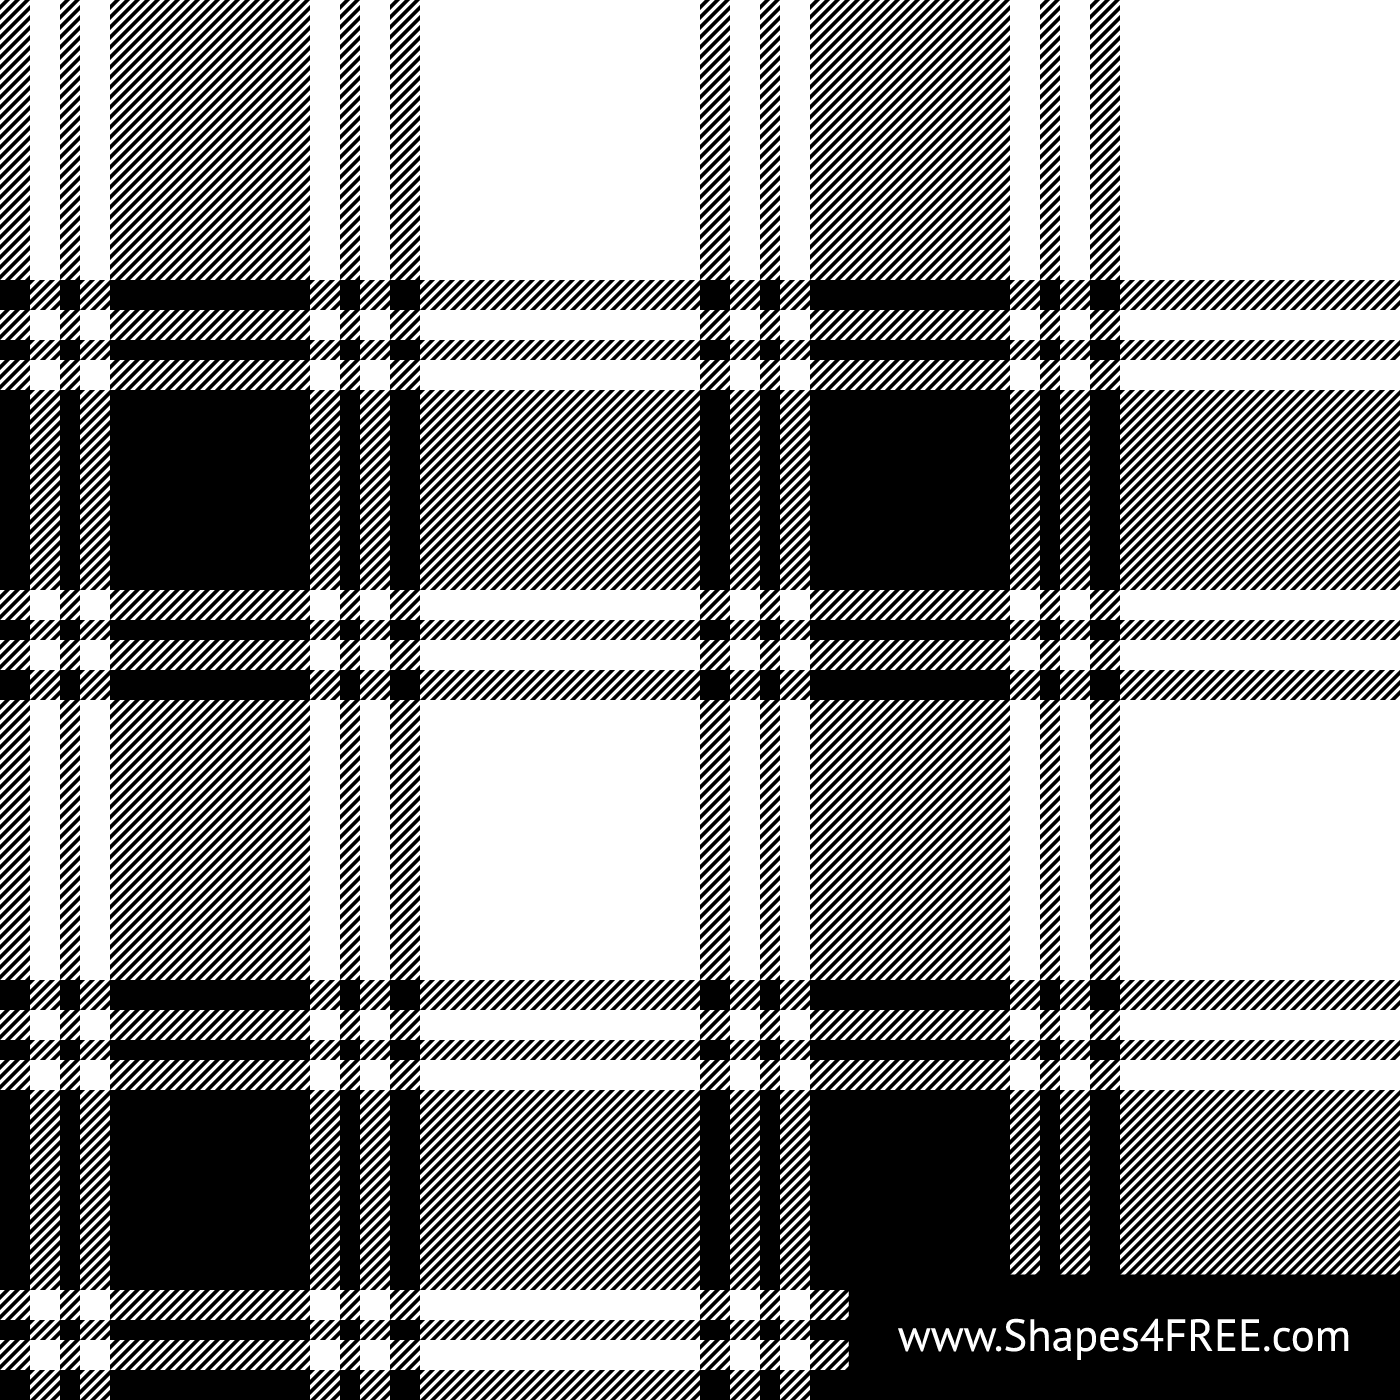 Black & White Check Plaid Vector Pattern (SVG)